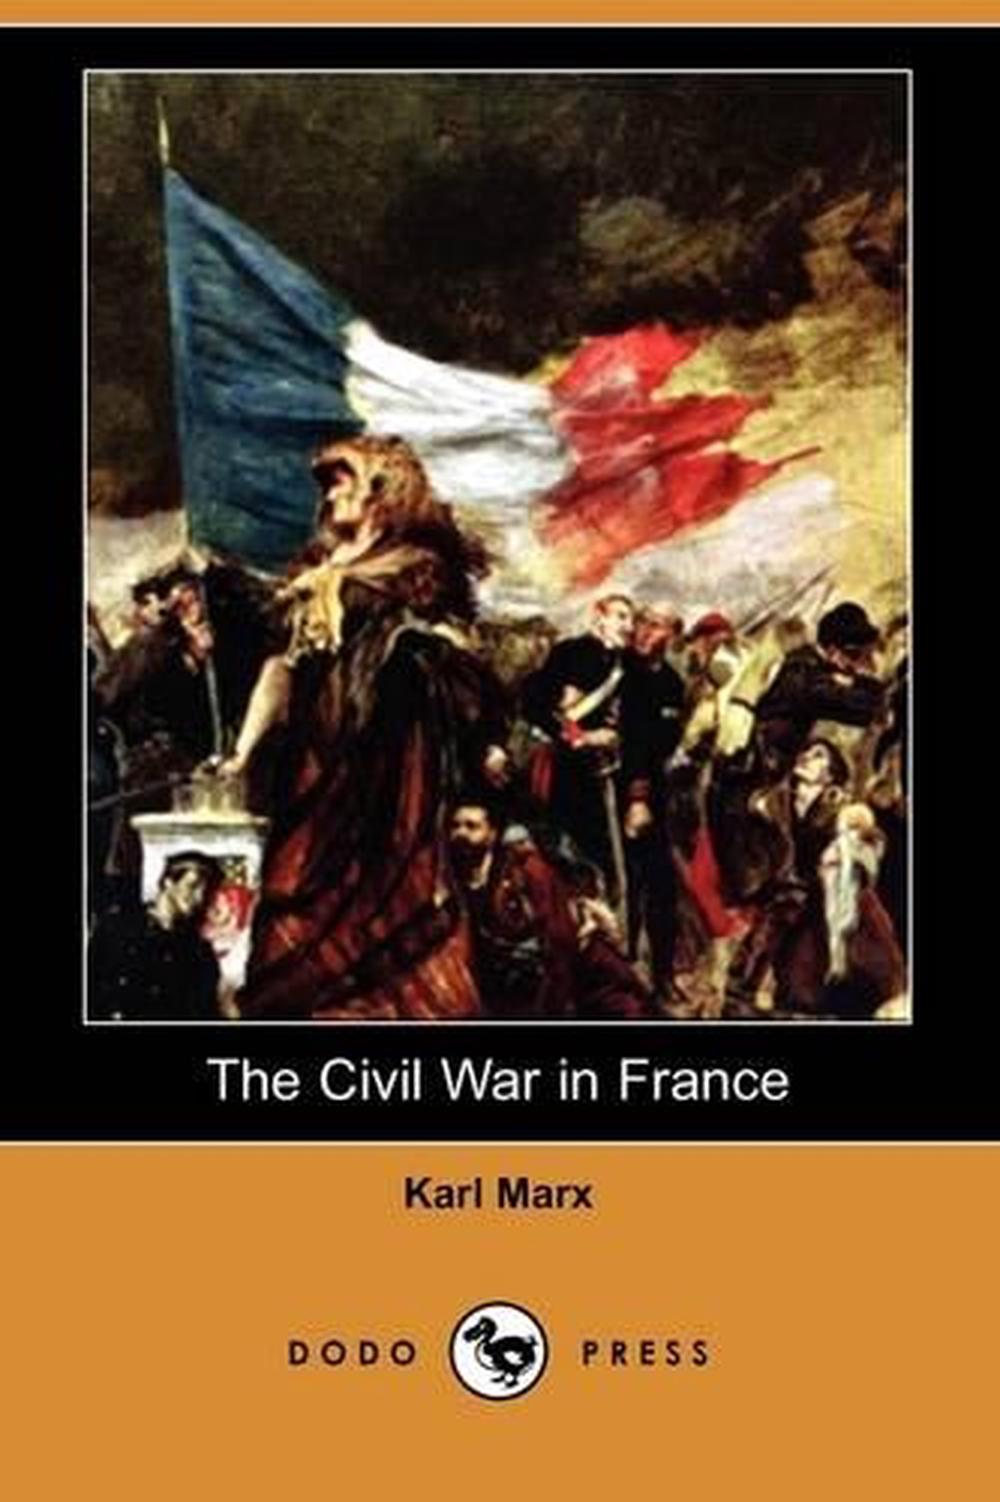 The Civil War in France (Dodo Press) by Karl Marx (English) Paperback